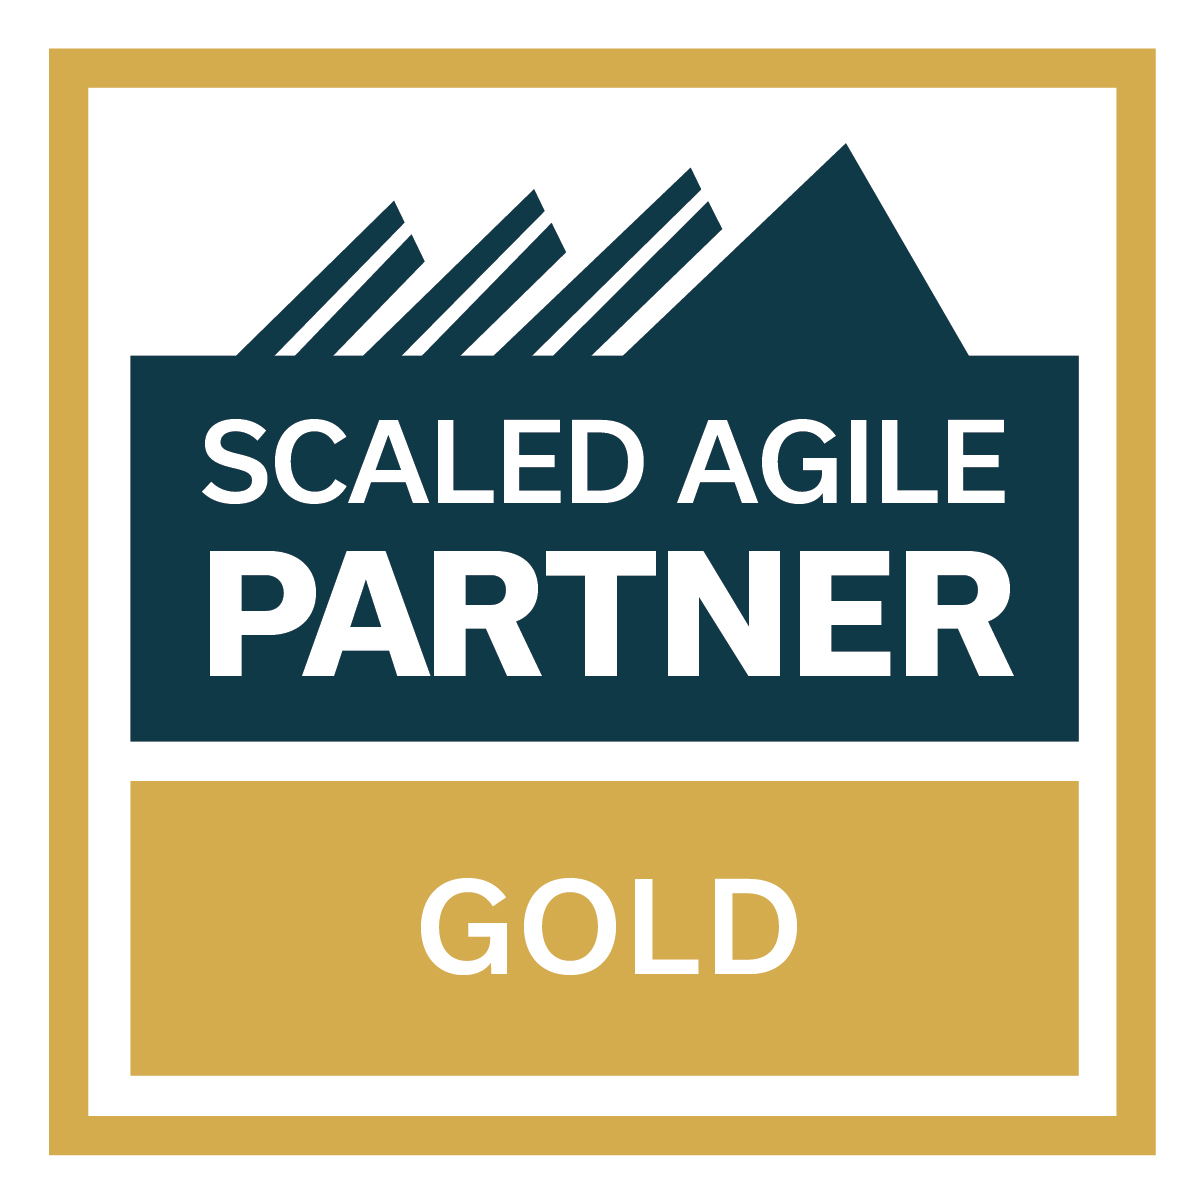 Scaled Agile Gold Partner